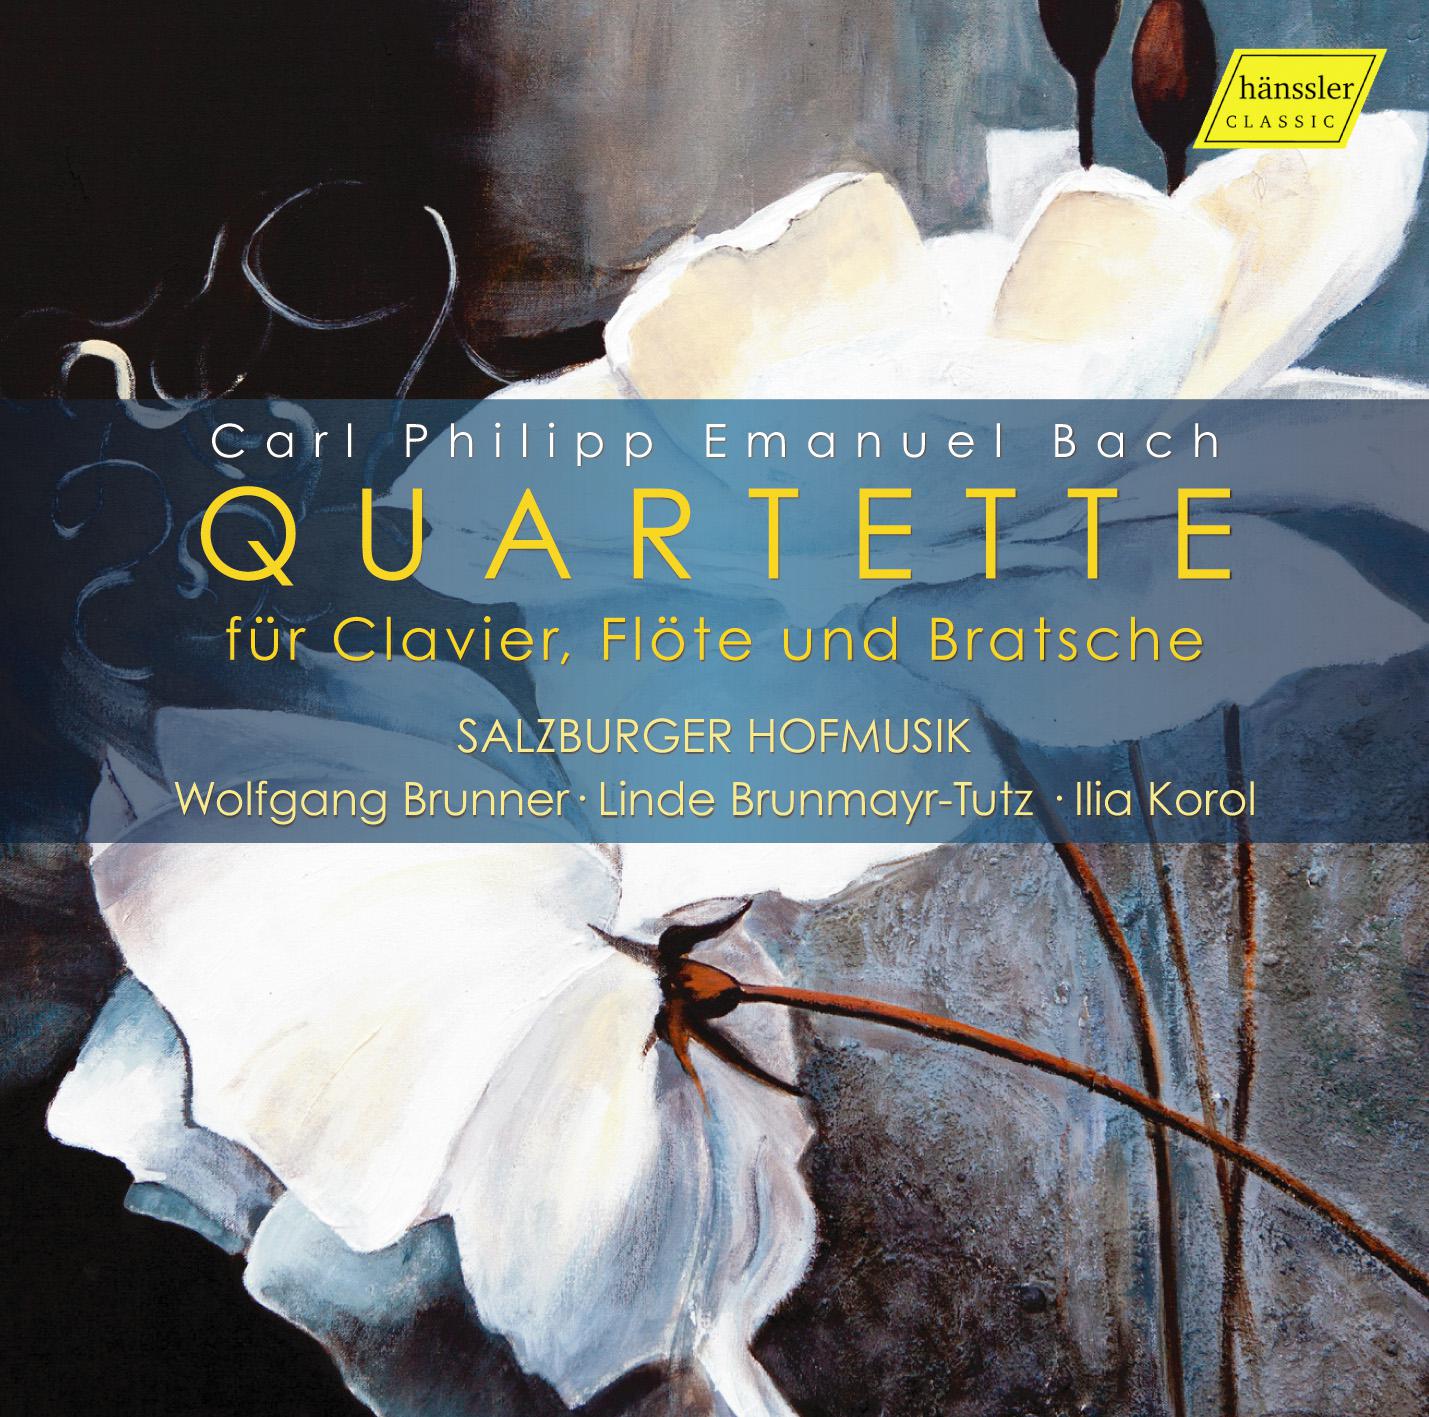 Quartette for Keyboard, Flute & Viola in G Major, Wq. 95: II. Adagio